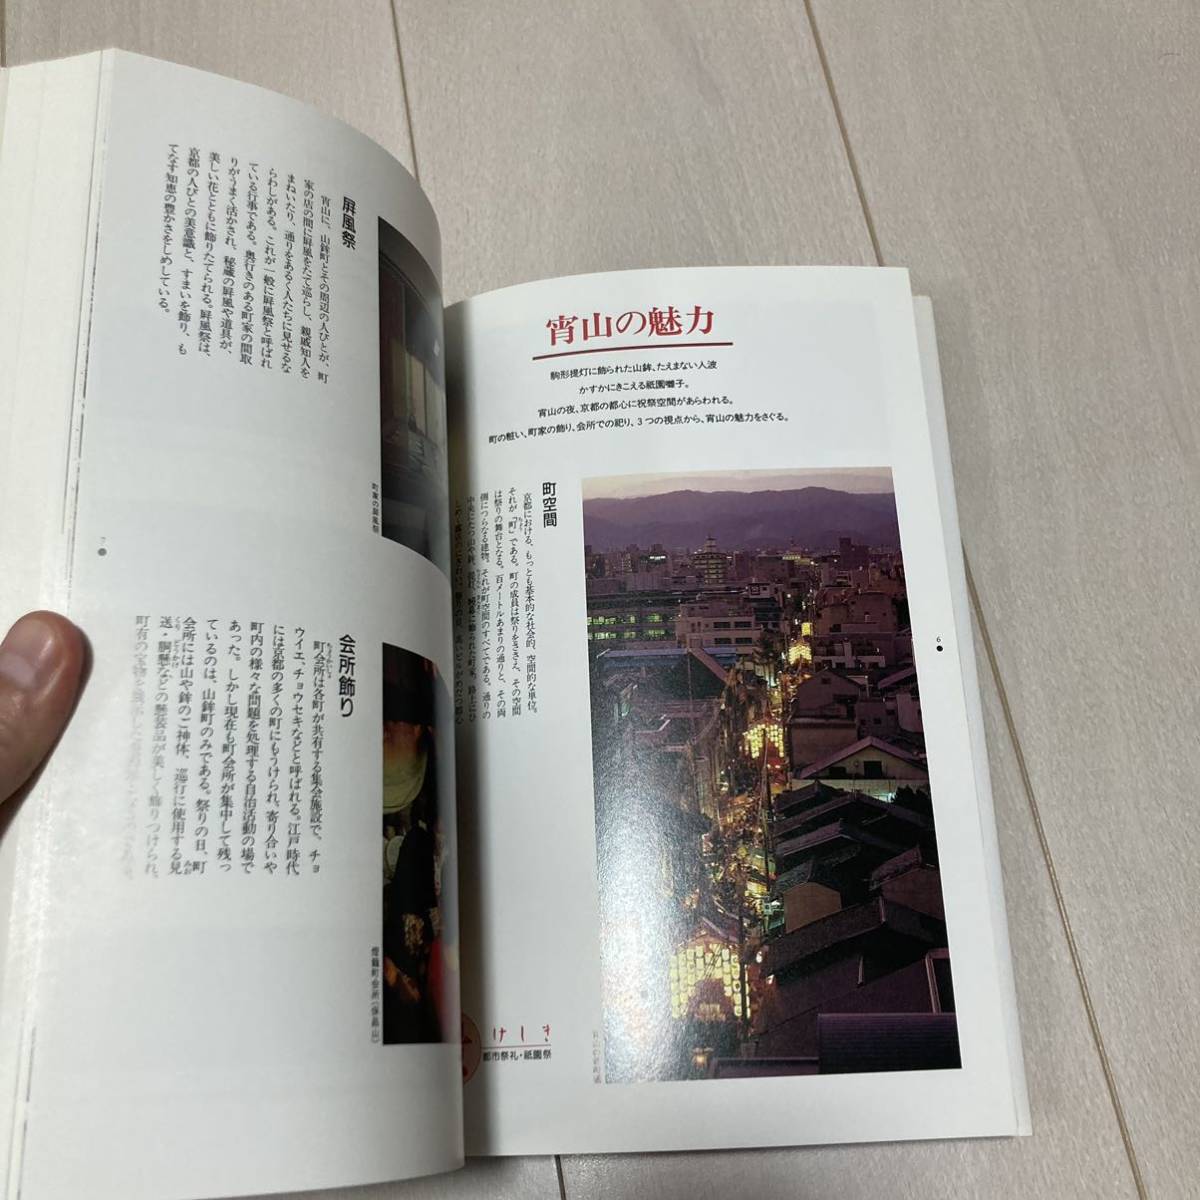 C 平成6年 1994年発行 「まち祇園祭すまい 都市祭礼の現代」_画像3